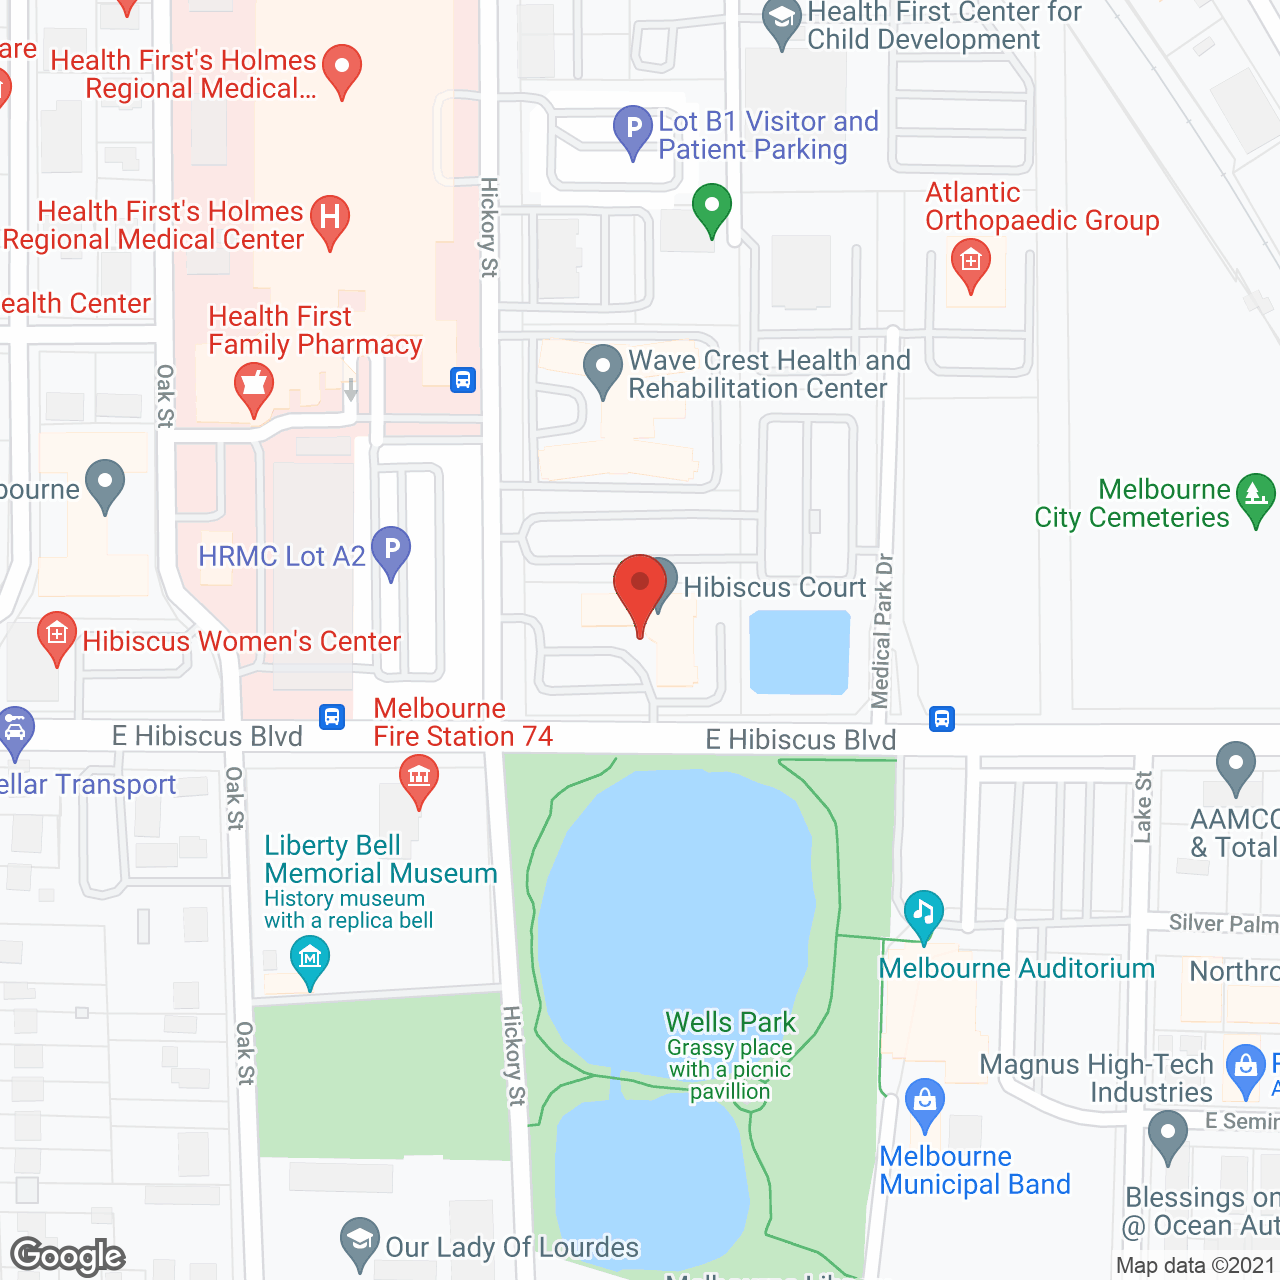 Hibiscus Court in google map